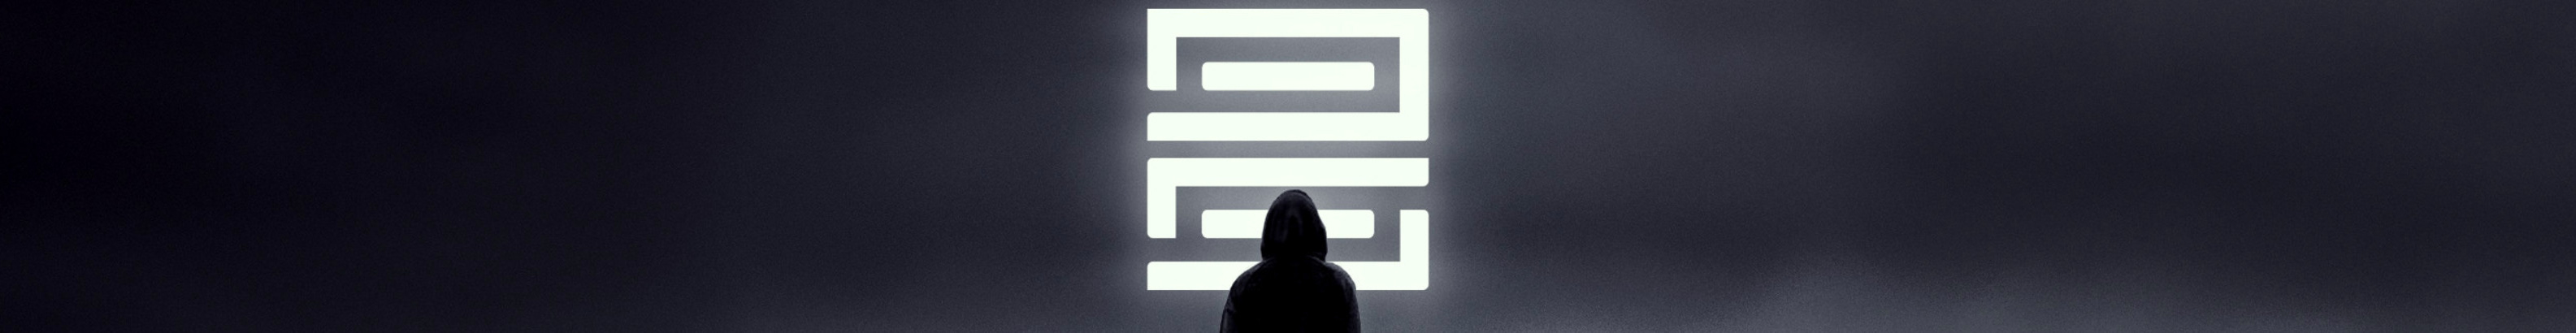 DinapixStudio | Digital Agency's profile banner